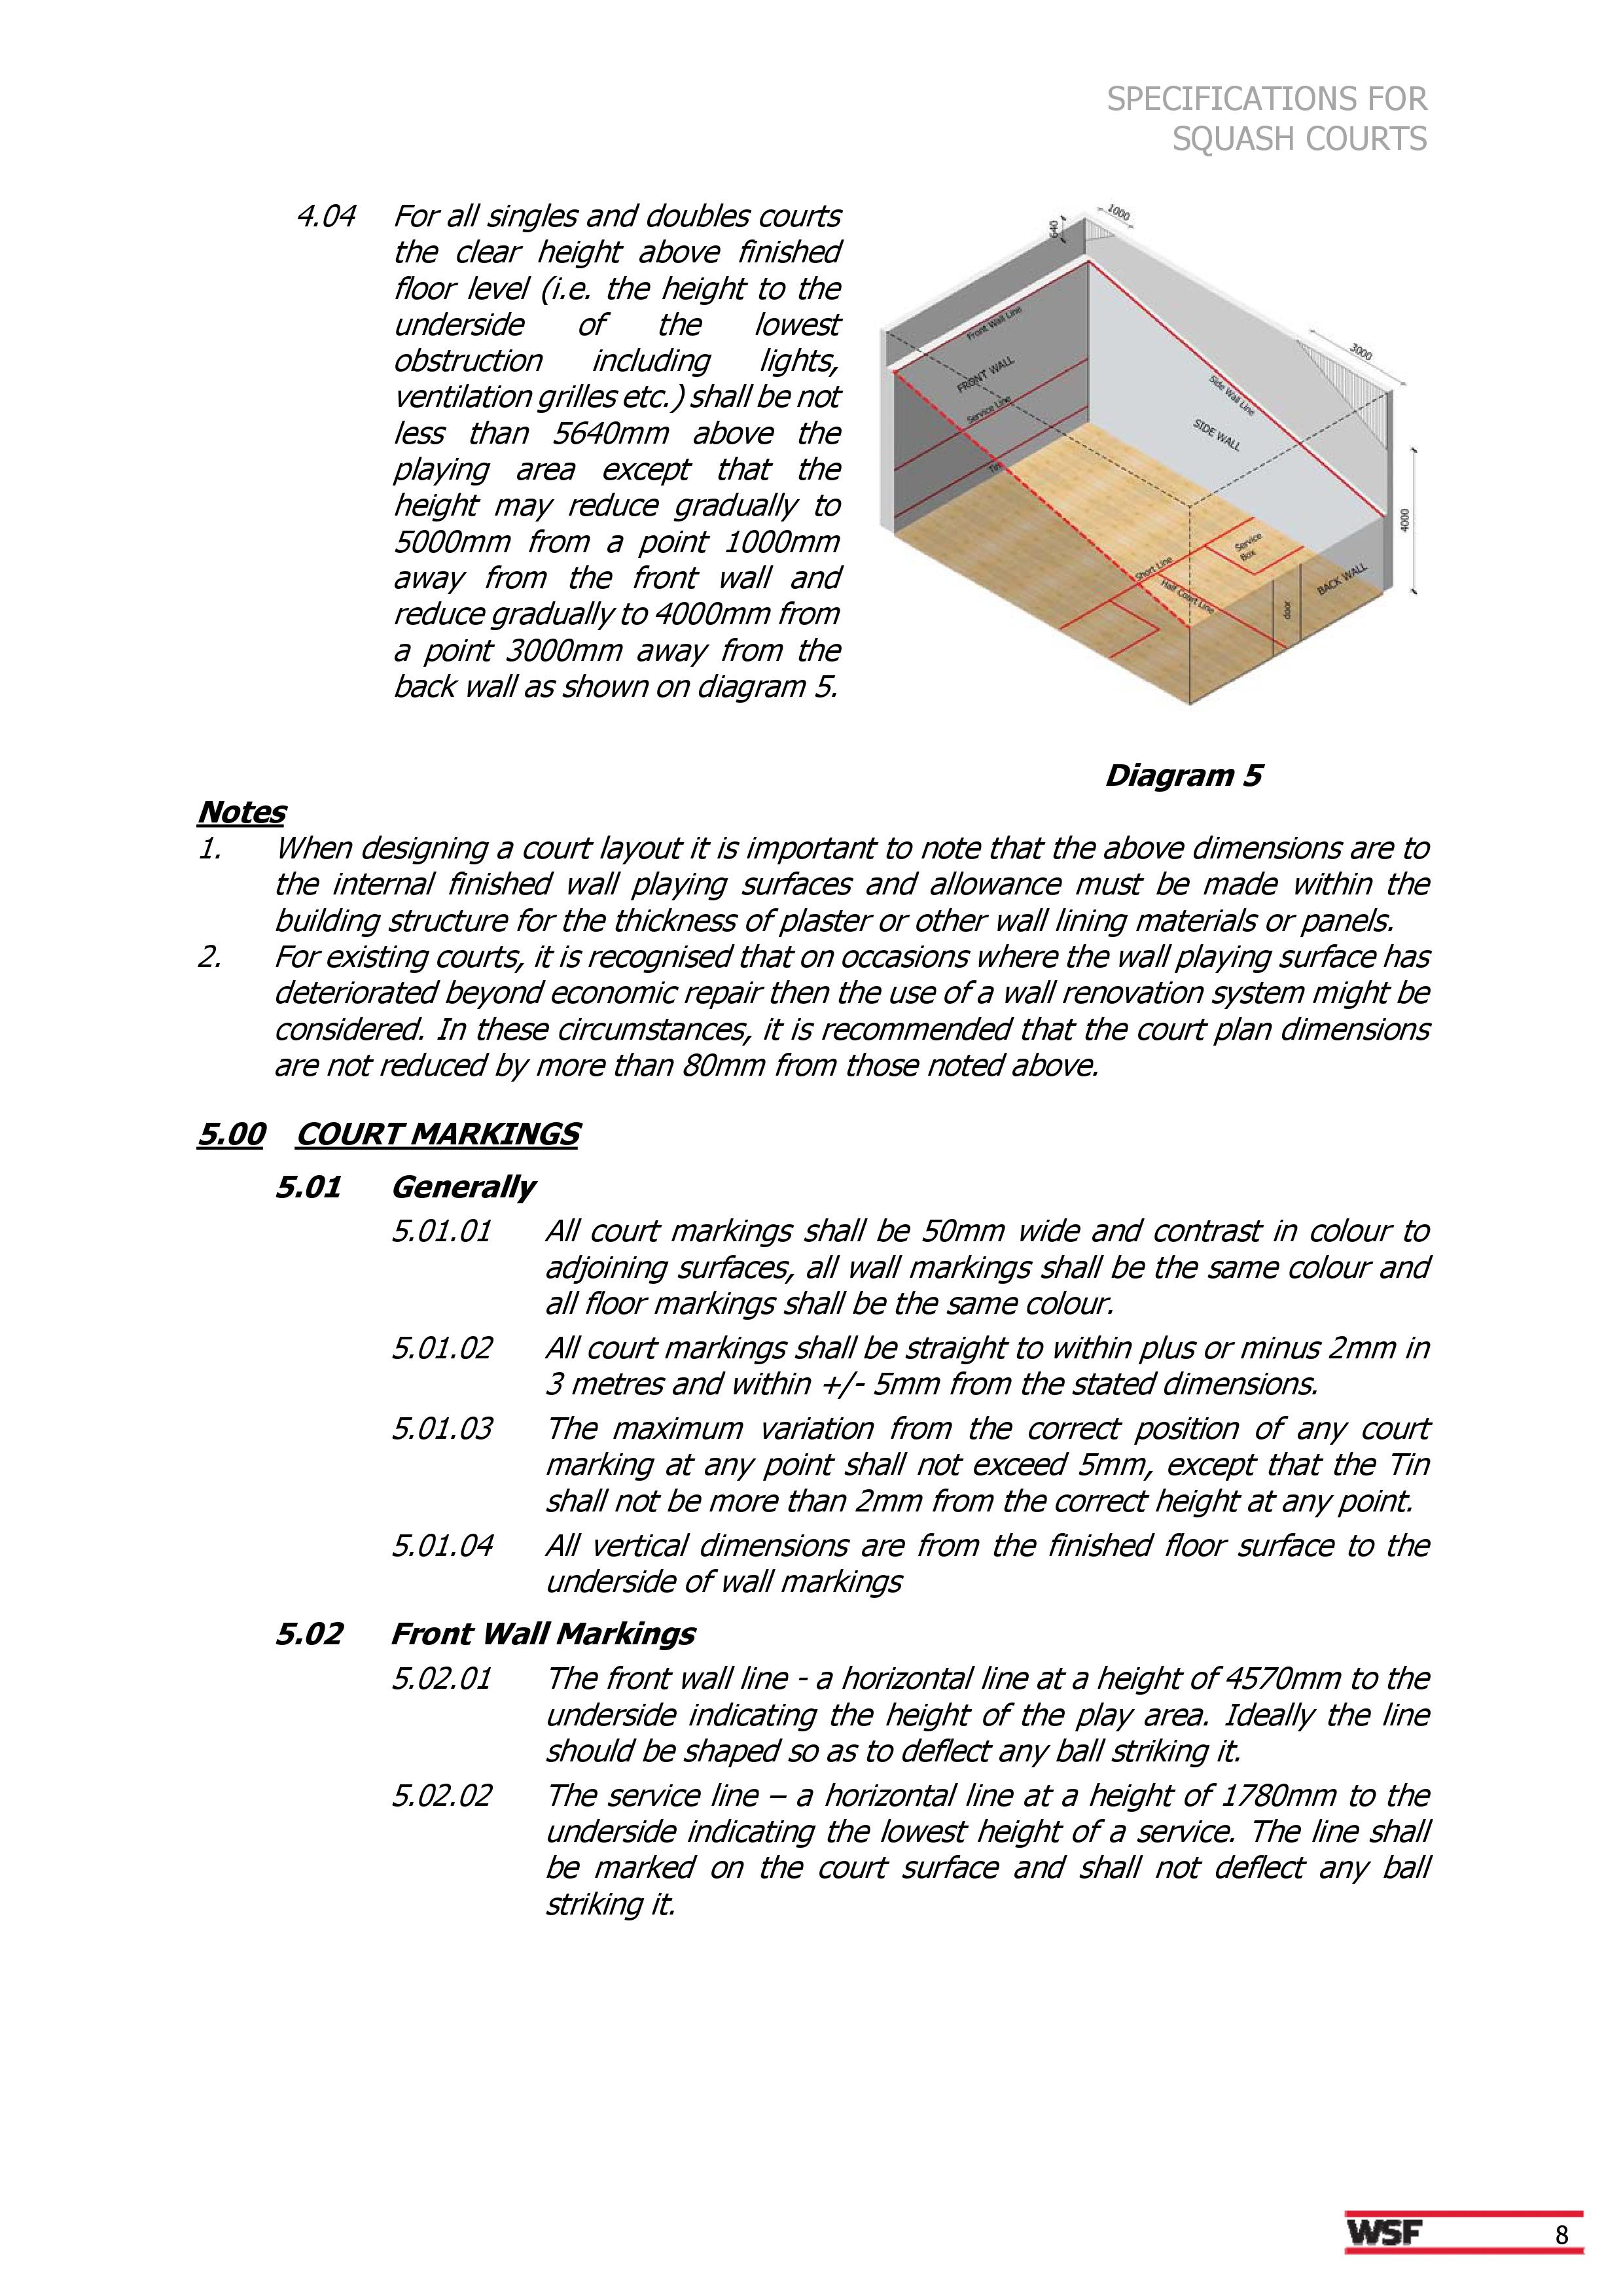 World Squash Federation Squash Court Specifications - Global Squash Coach - Page 10.jpg